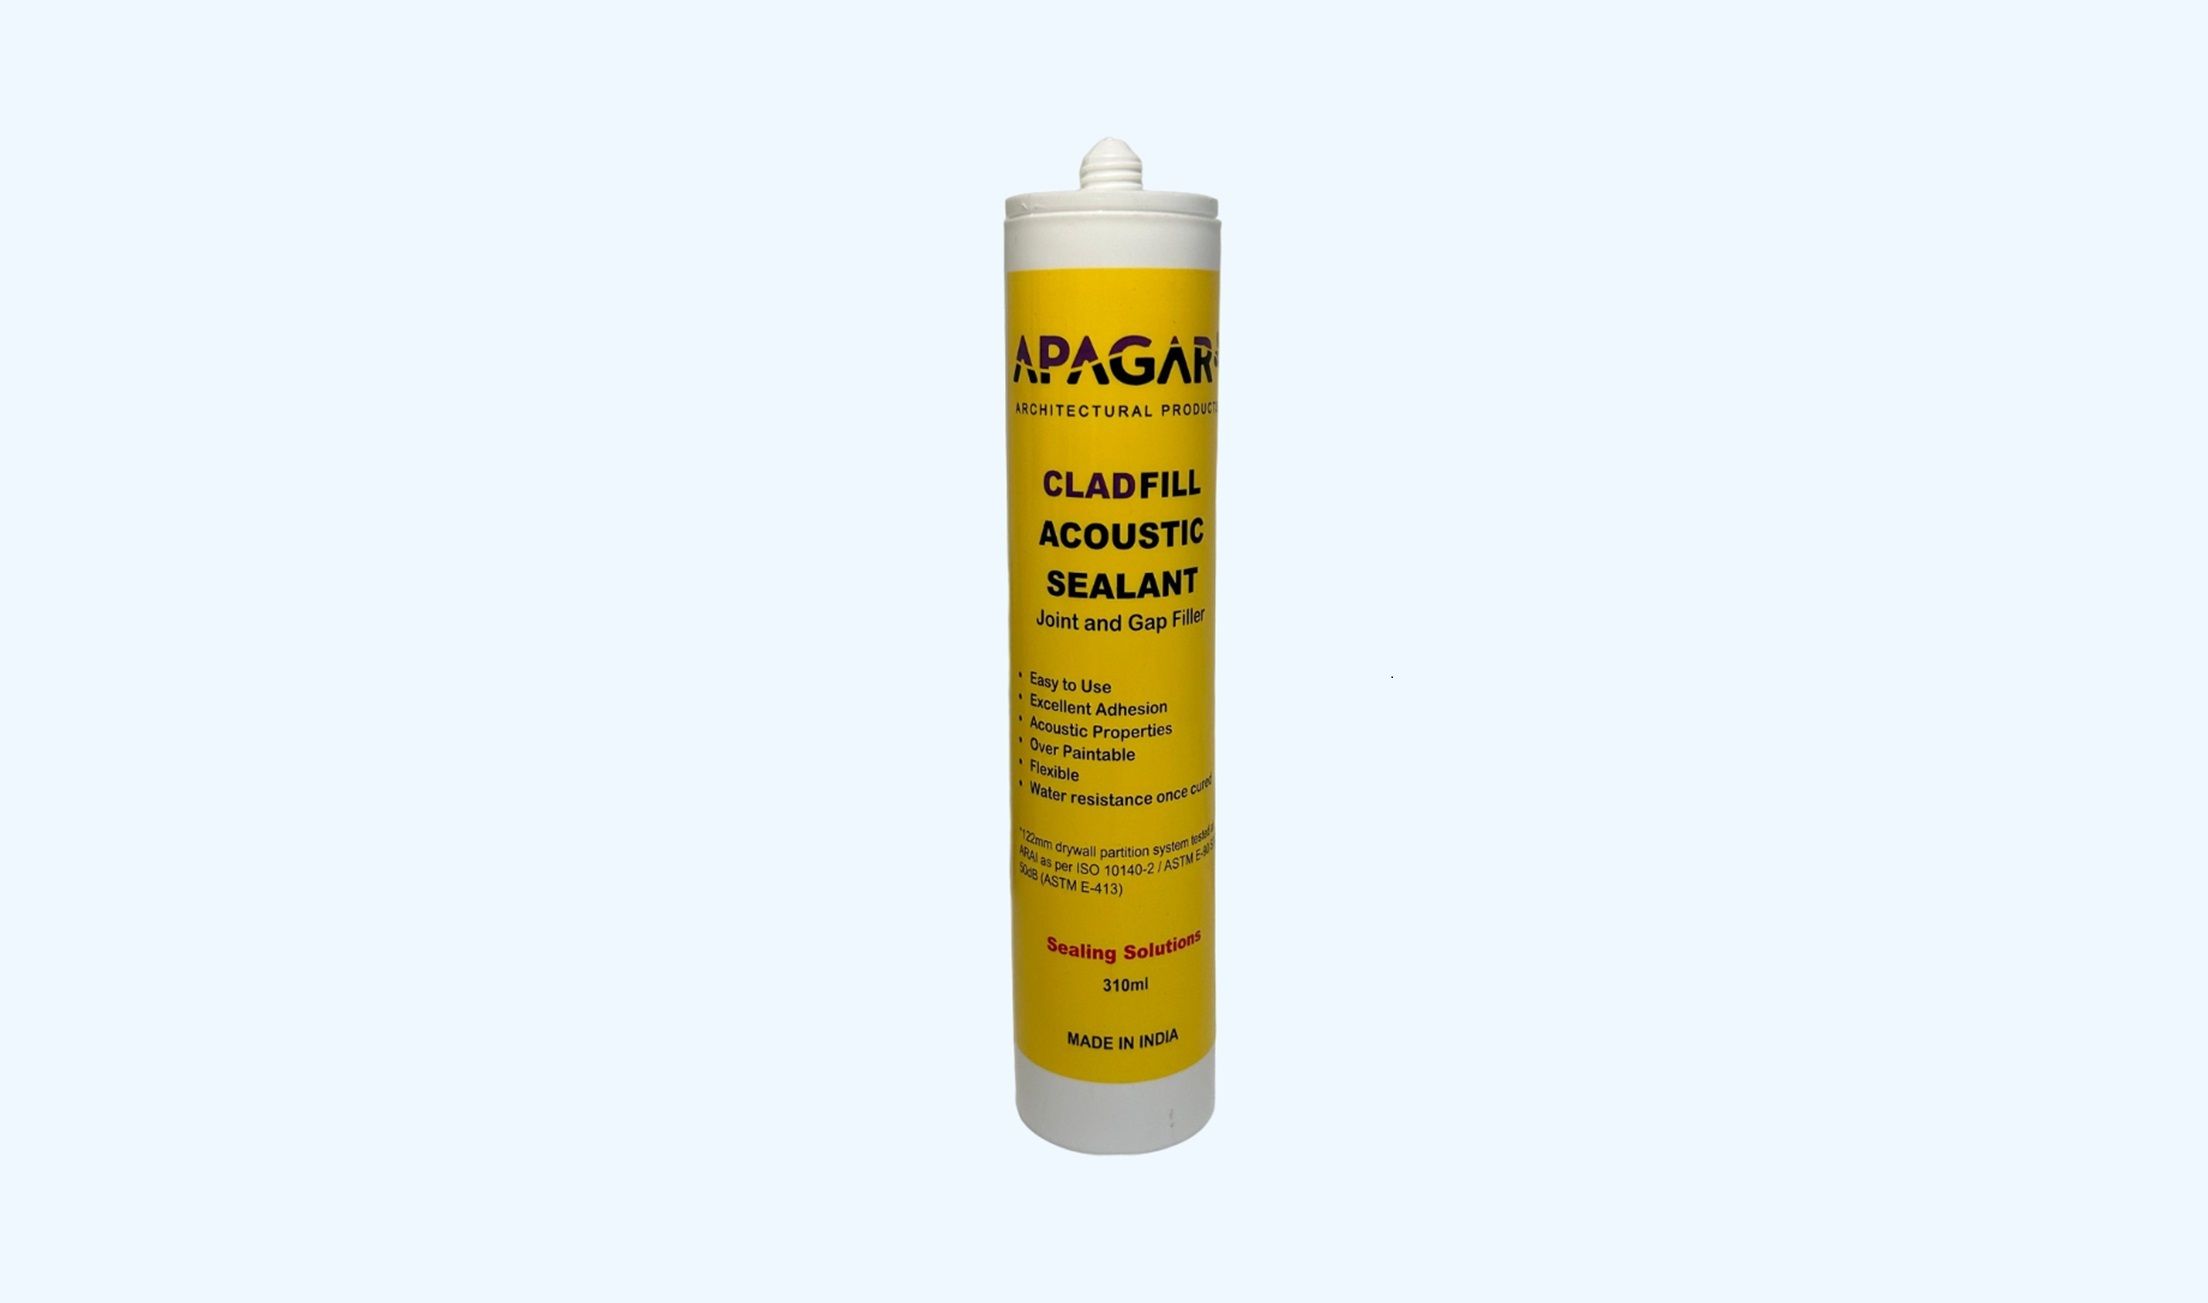 Apagar Cladfill Acoustic Sealant